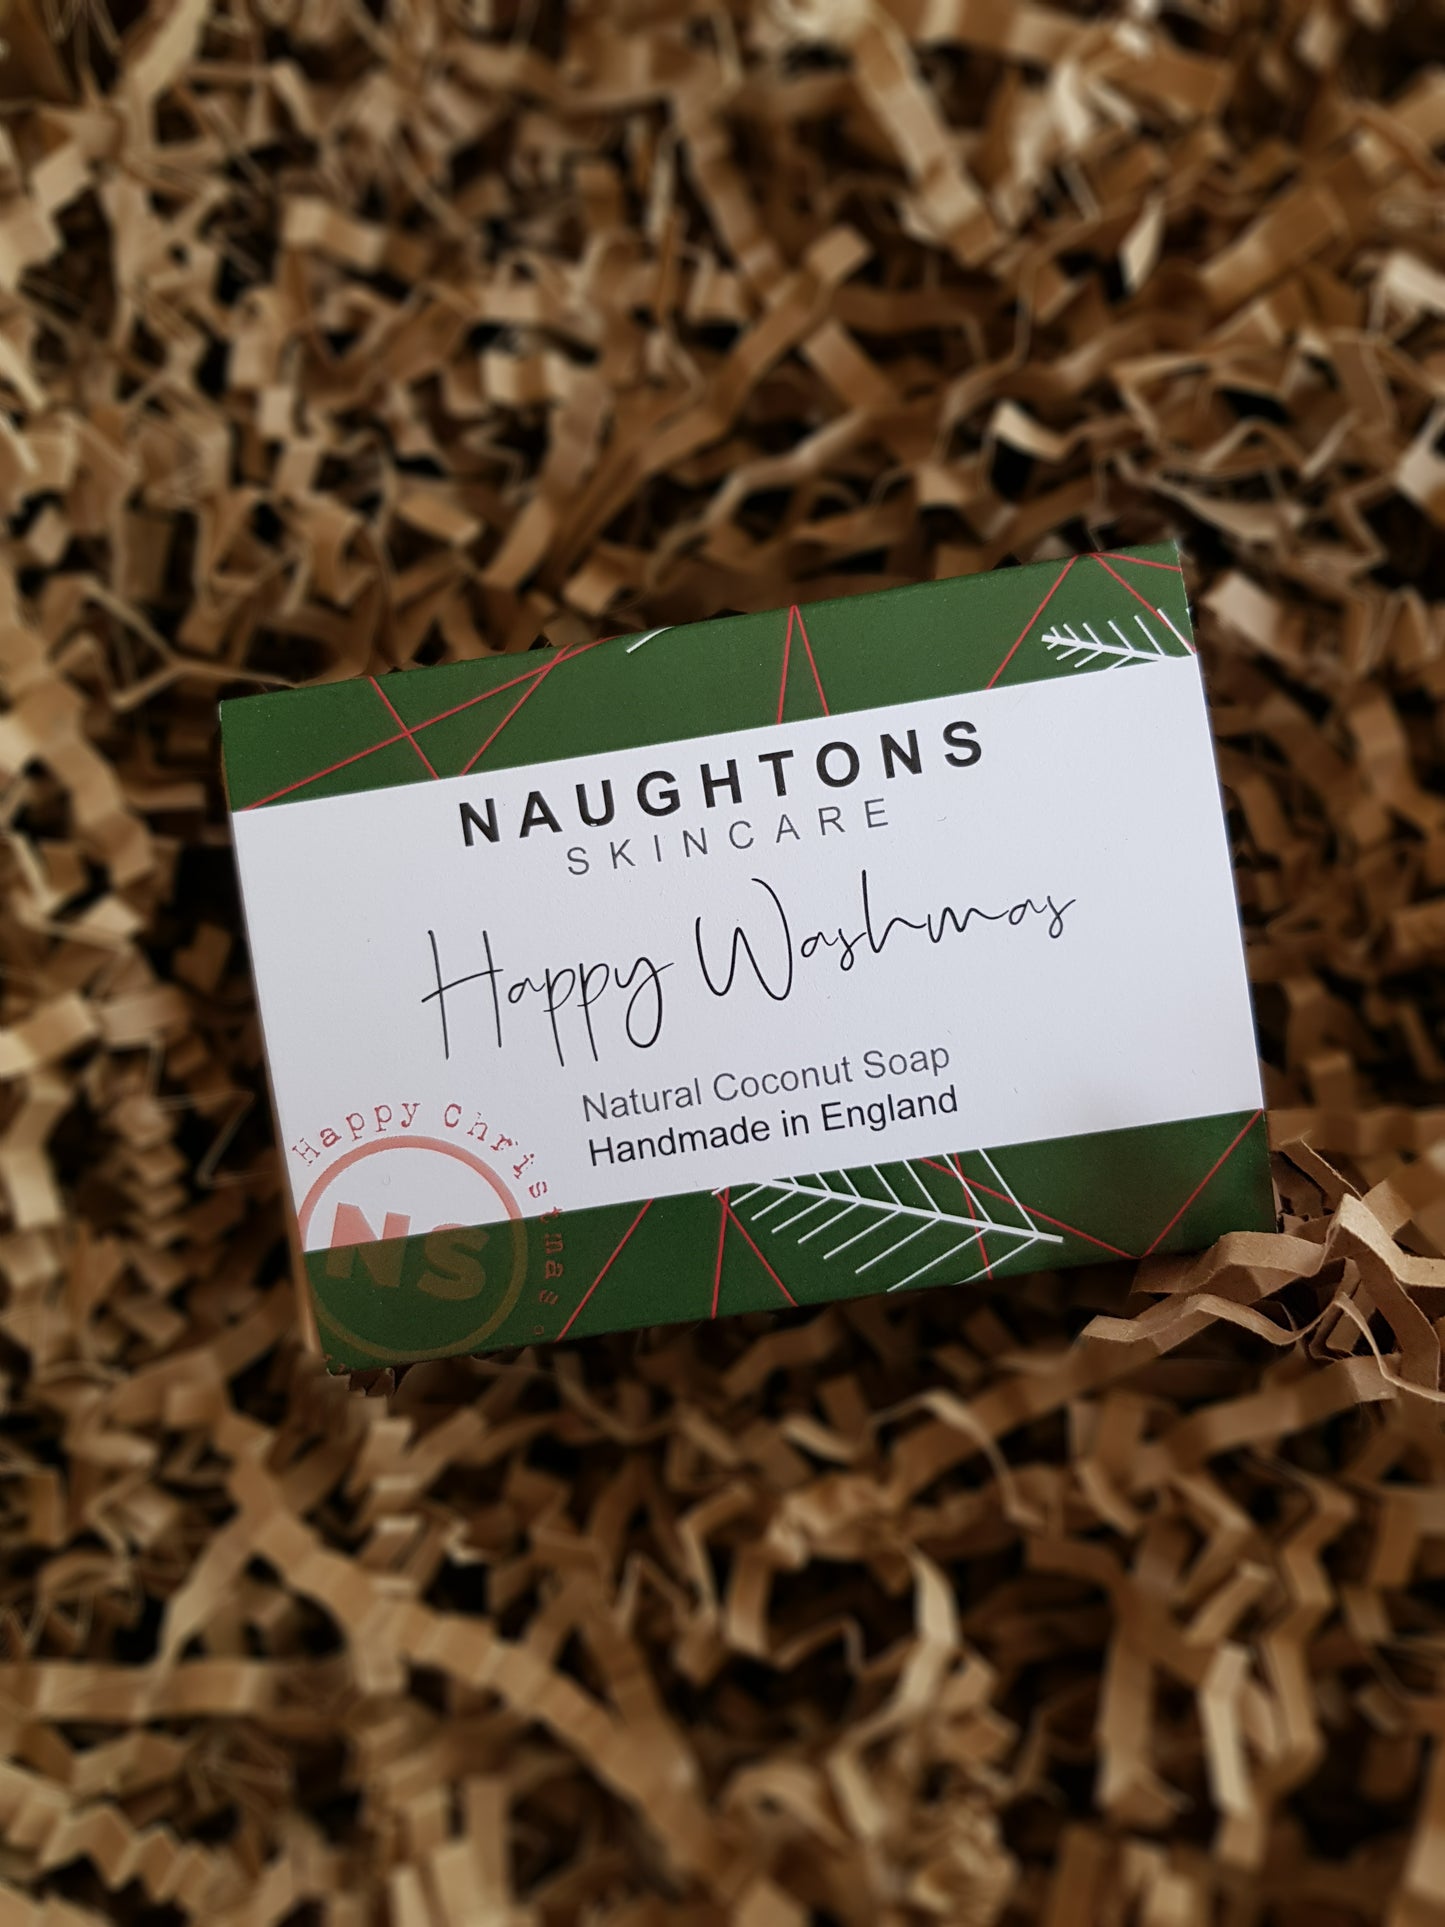 Naughtons Skincare Happy Washmas Soap